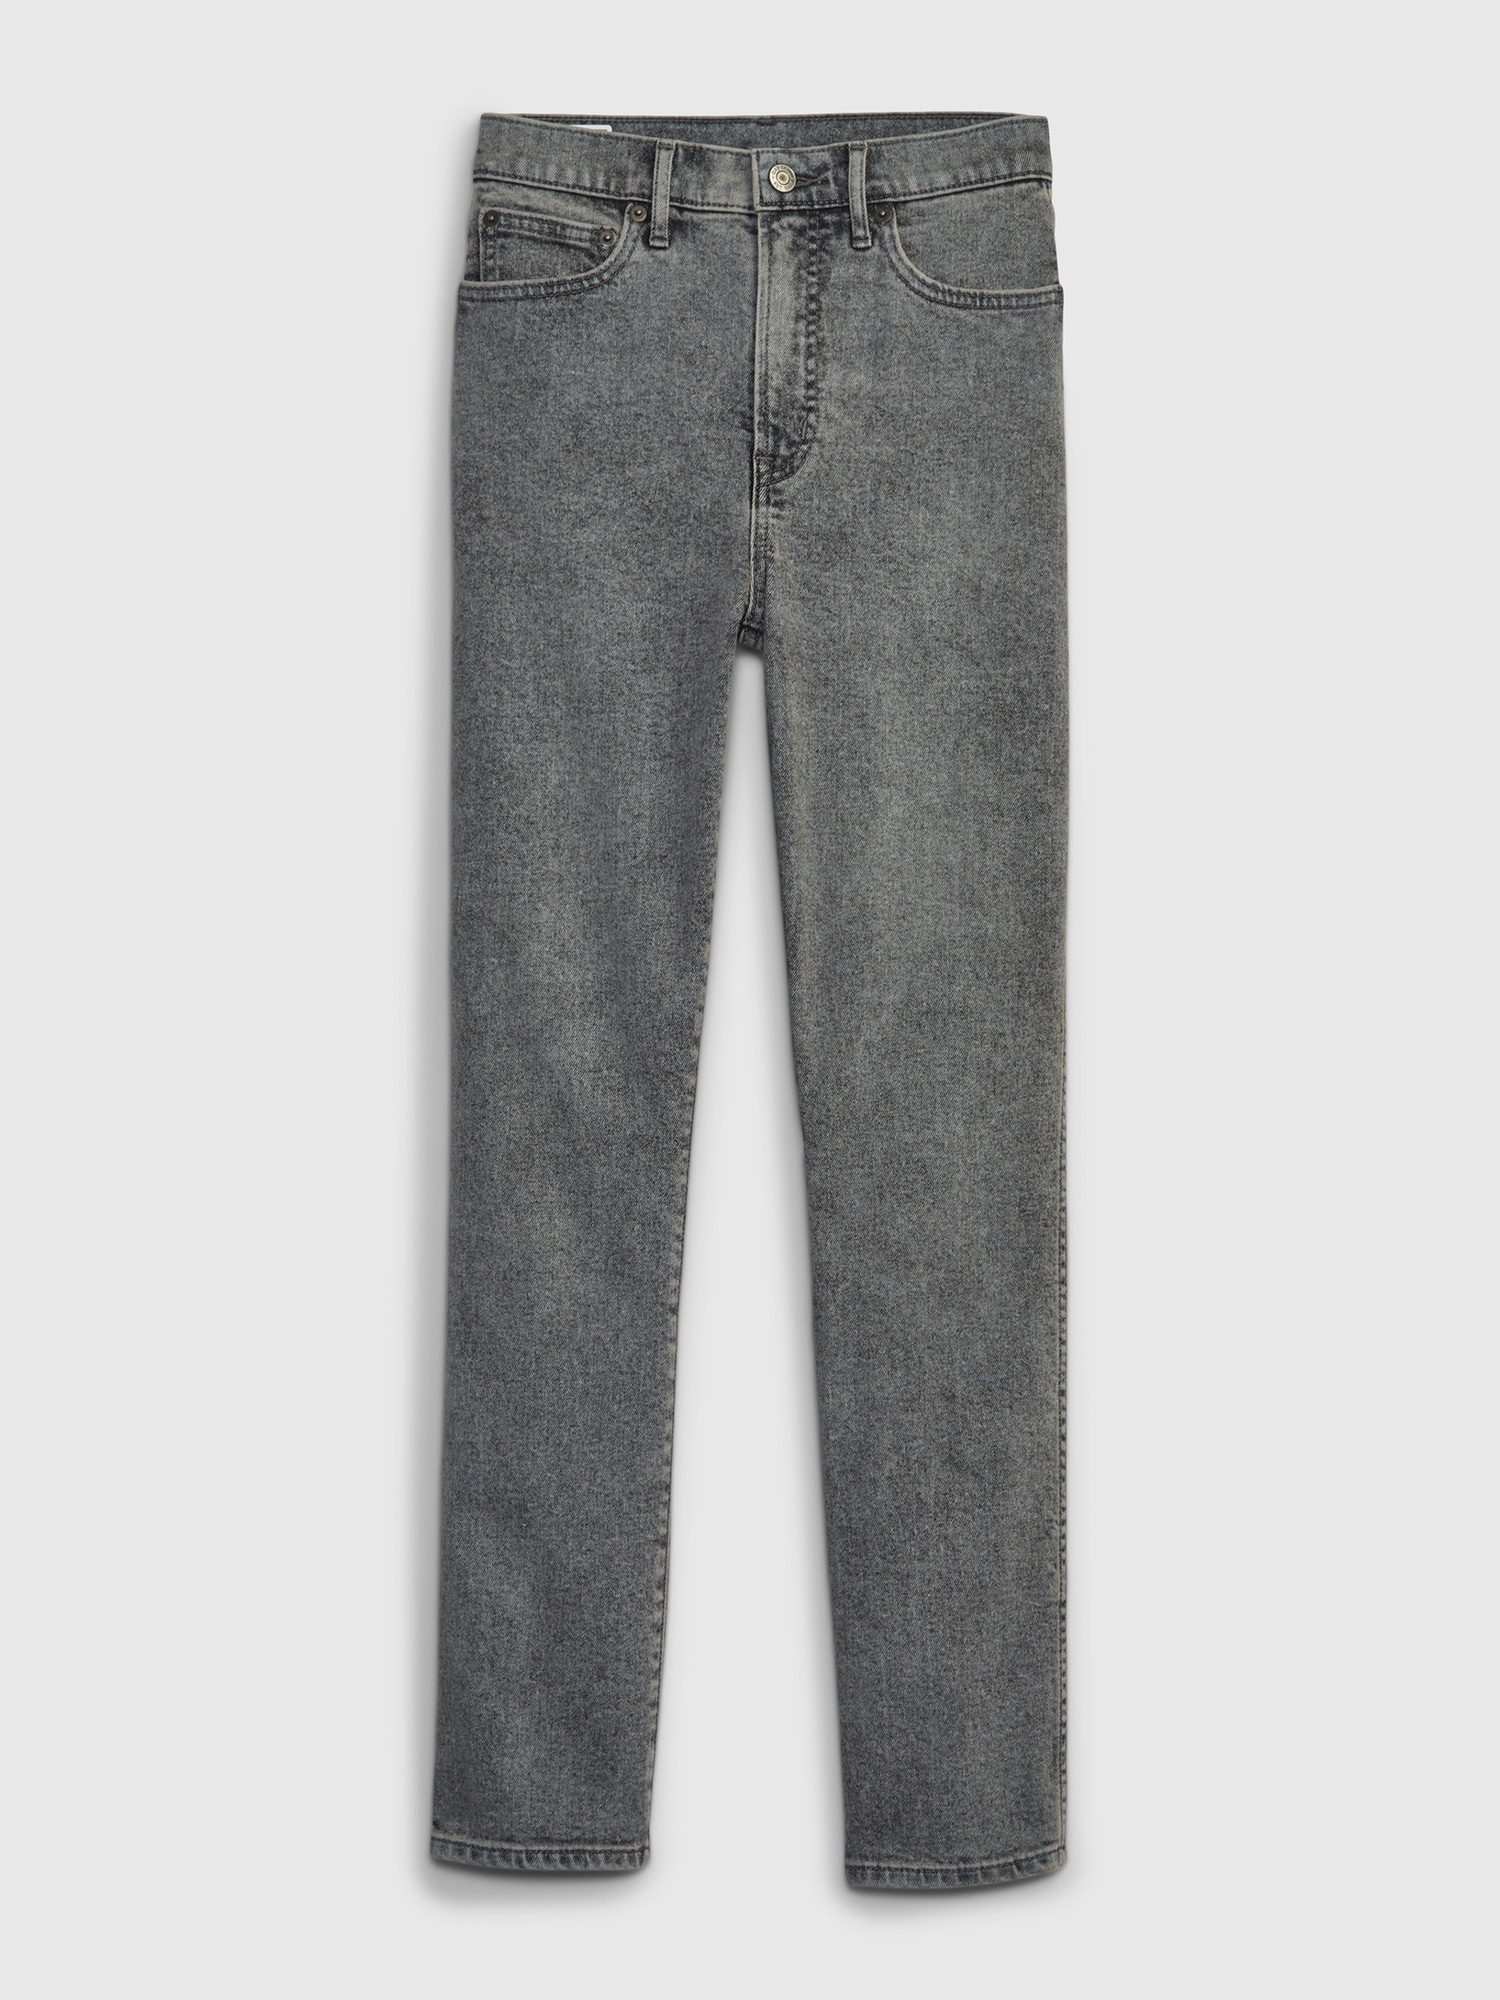 GAP, Jeans, Gap Size 6 True Skinny Distressed Denim Jeans